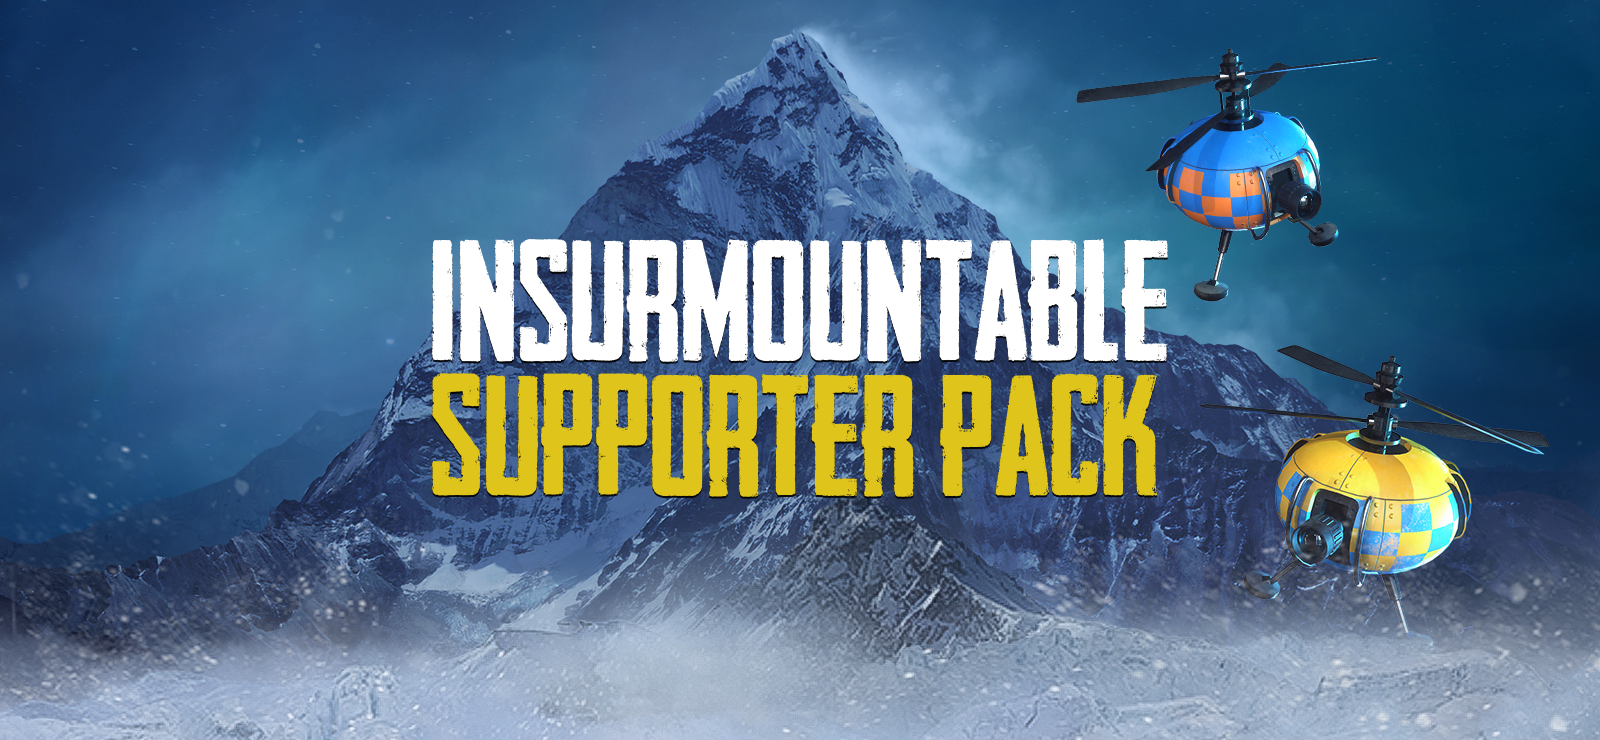 Insurmountable - Supporter Pack